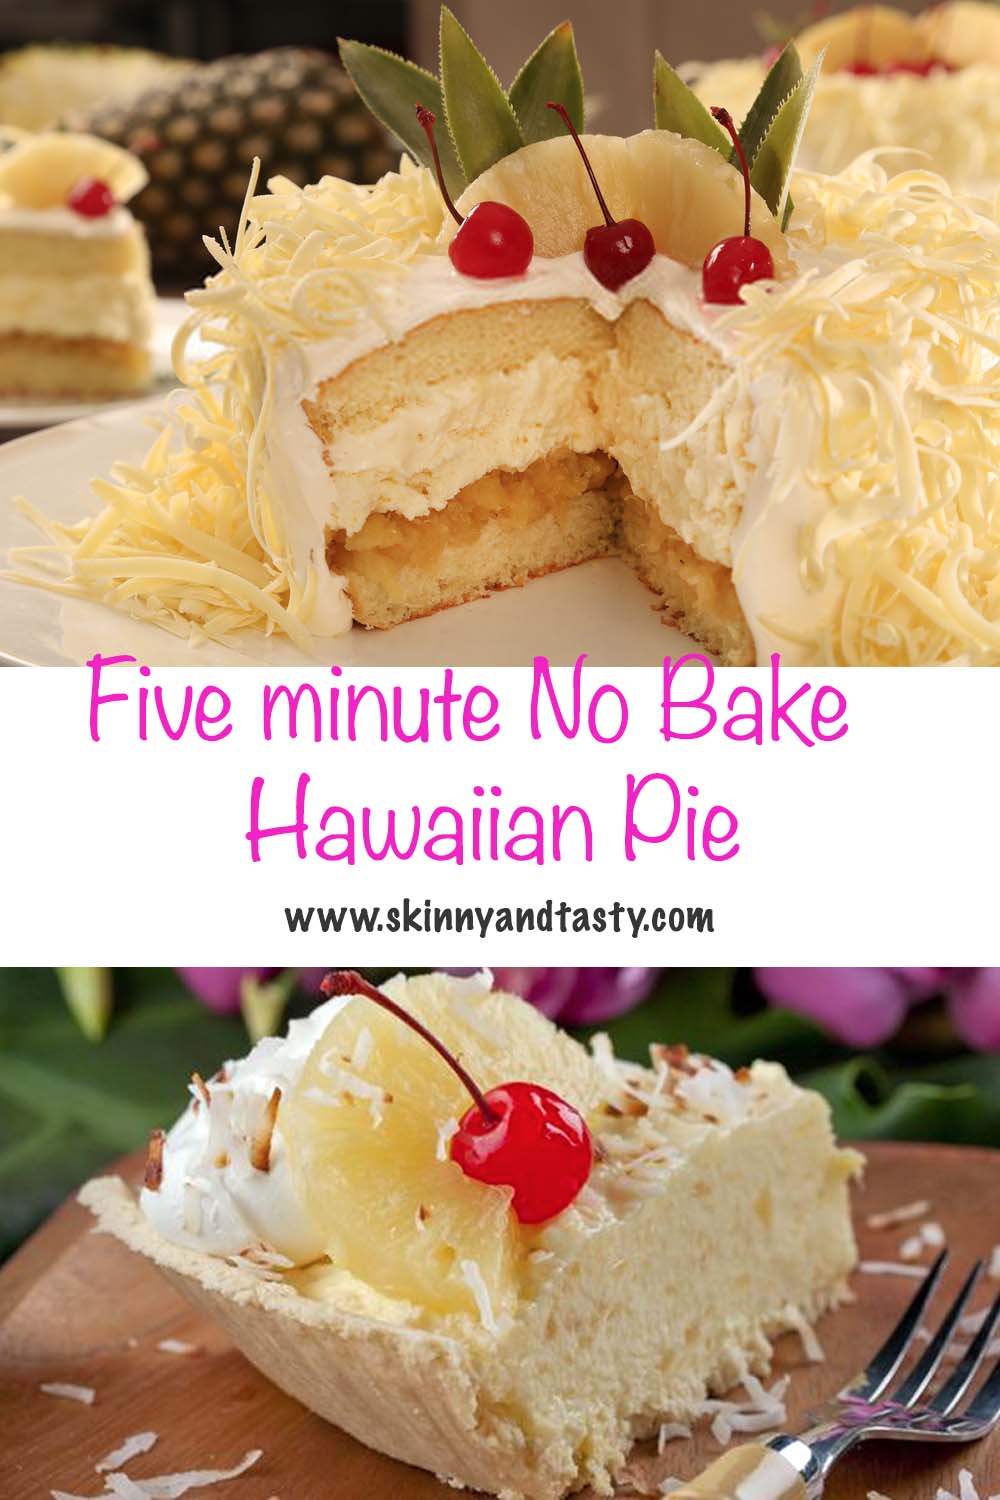 Five minute no bake hawaiian pie